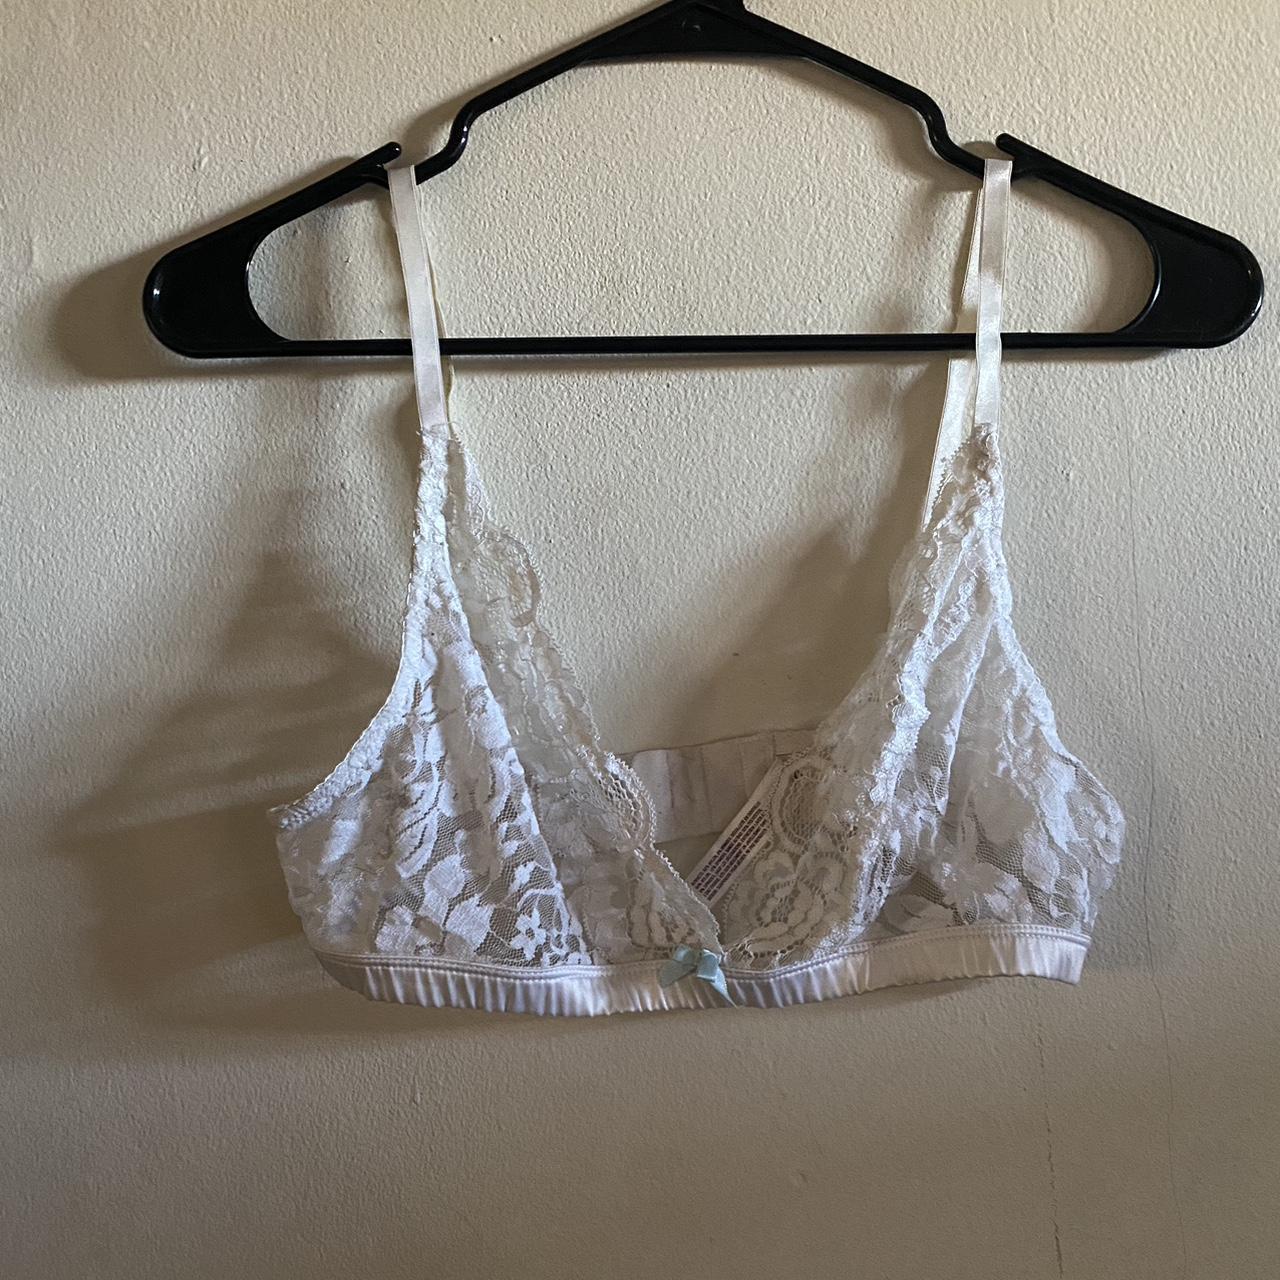 White Warner's bra 💖✨ the perfect, simple, - Depop